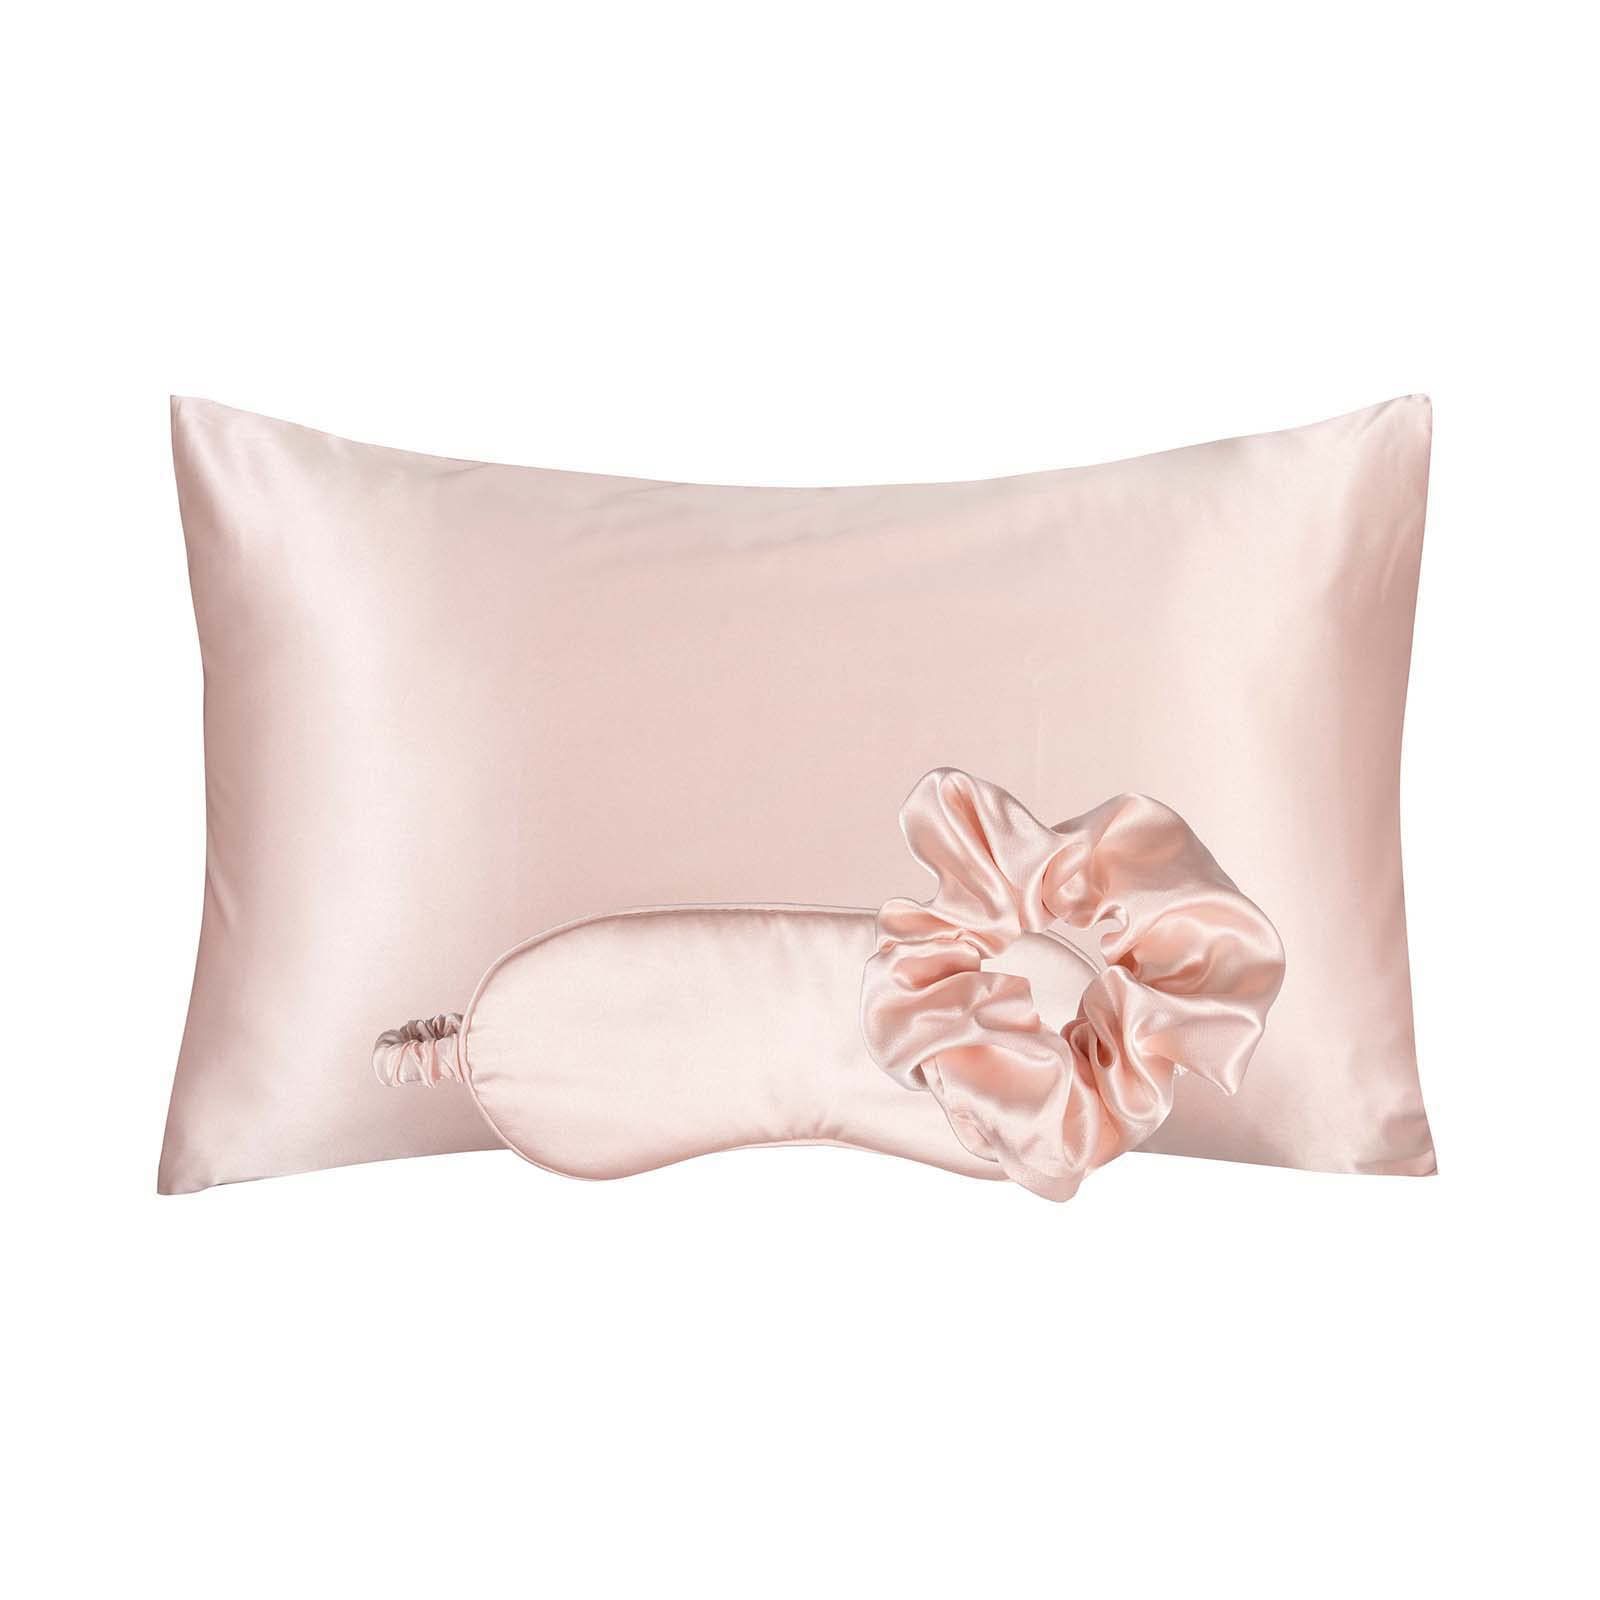 KISMETICS - Vegan Silk Sleep Set, Silky Pillowcase with Large Scrunchie and Eye Mask for Hair and Sk | Amazon (US)